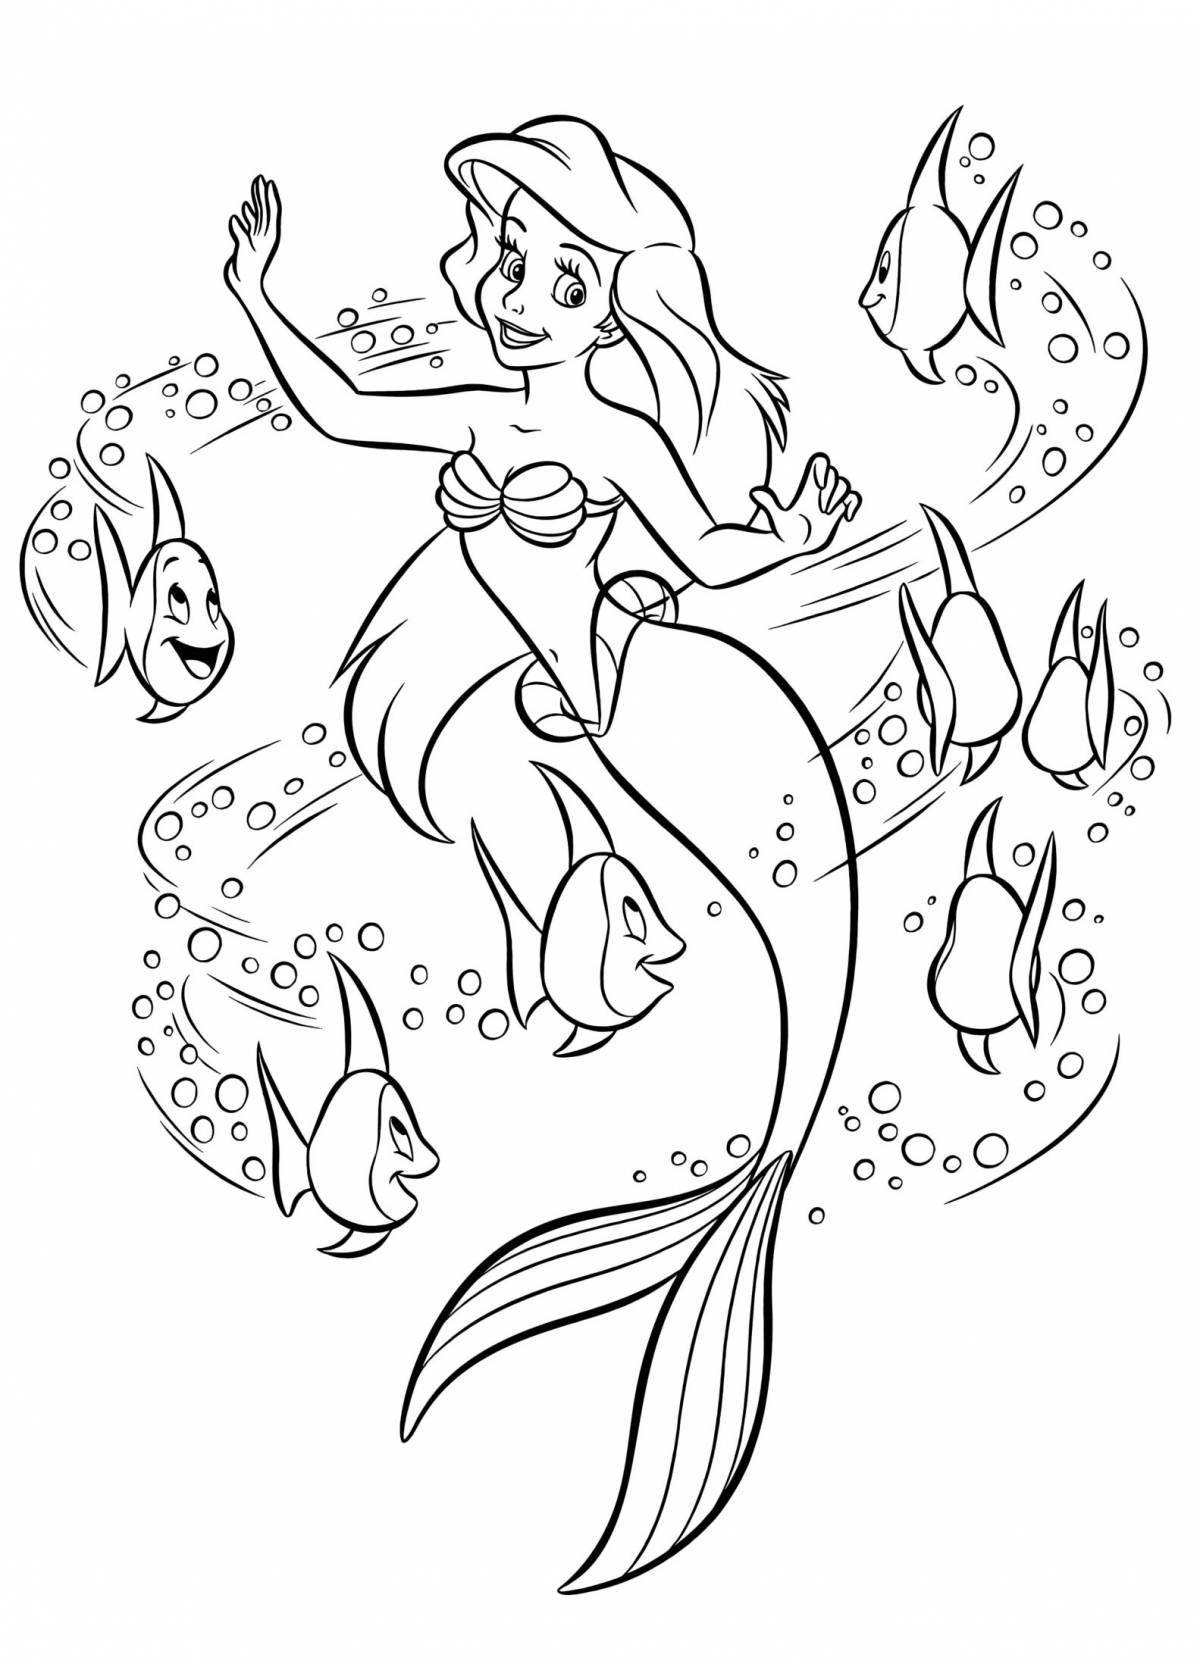 Glamorous little mermaid coloring book